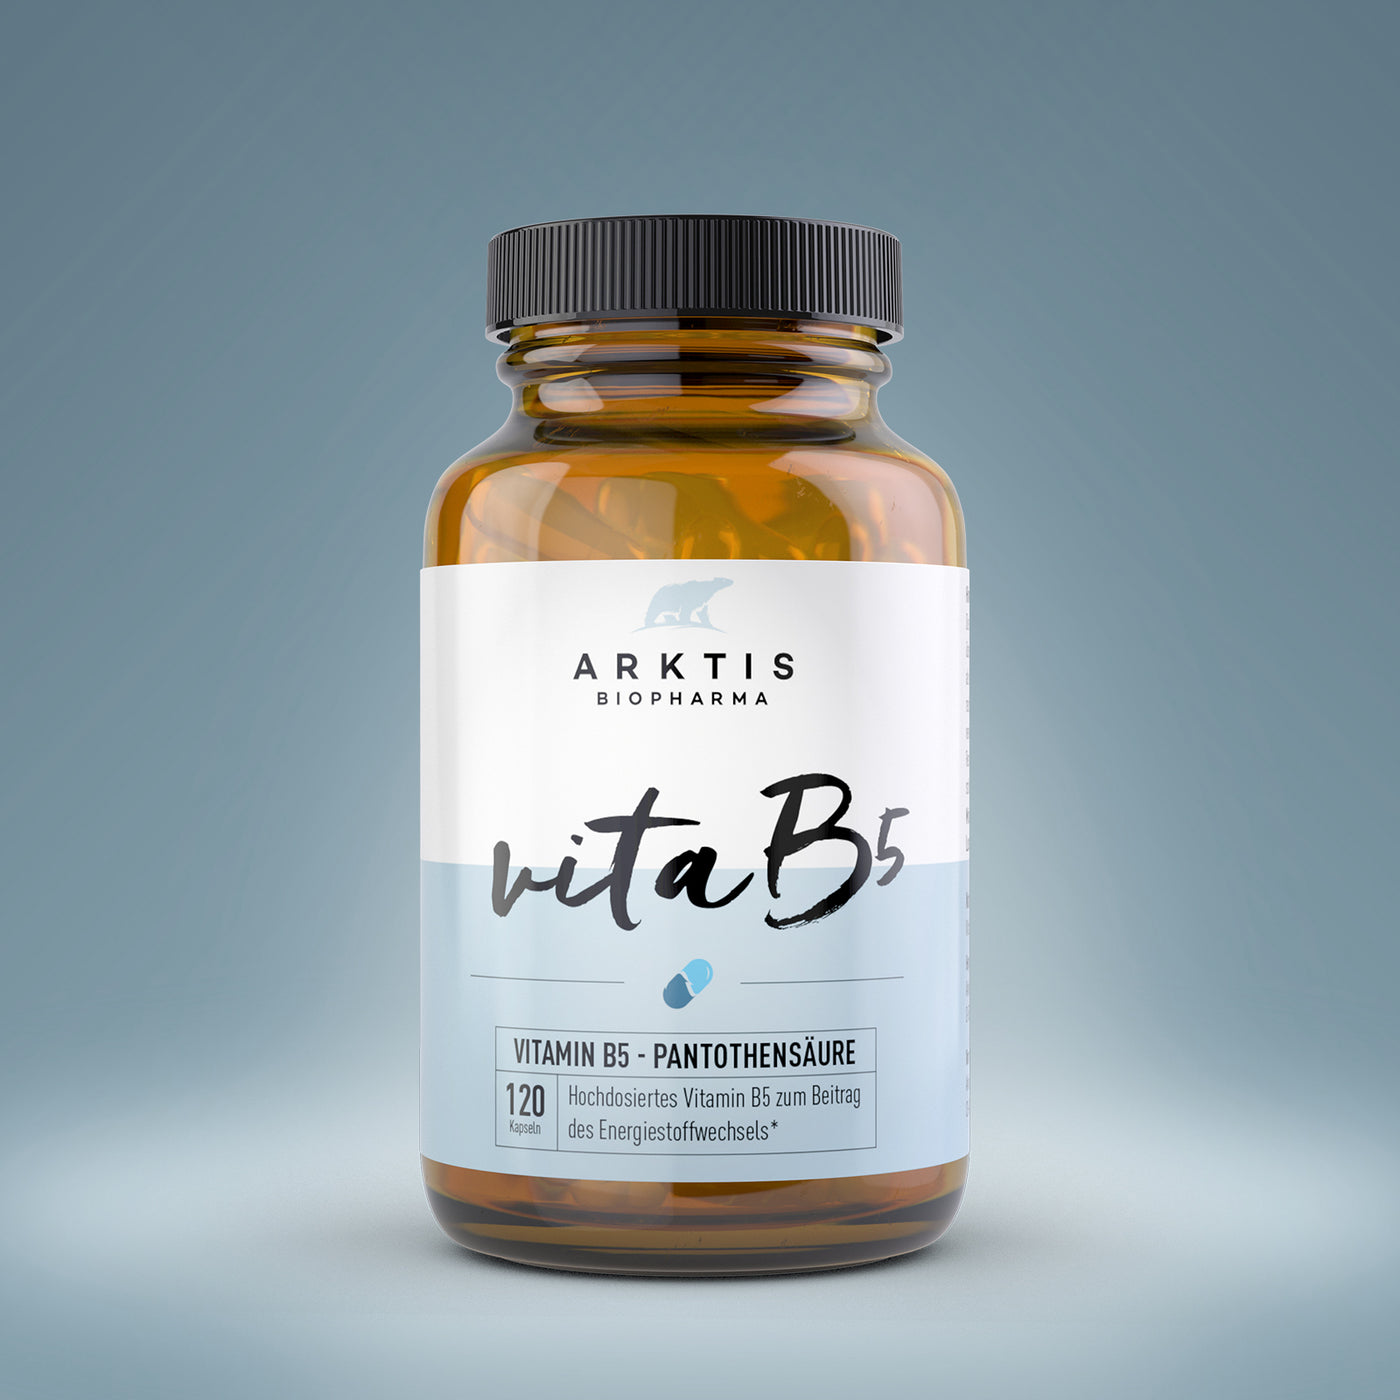 Arktis Vita B5 - Vitamin B5